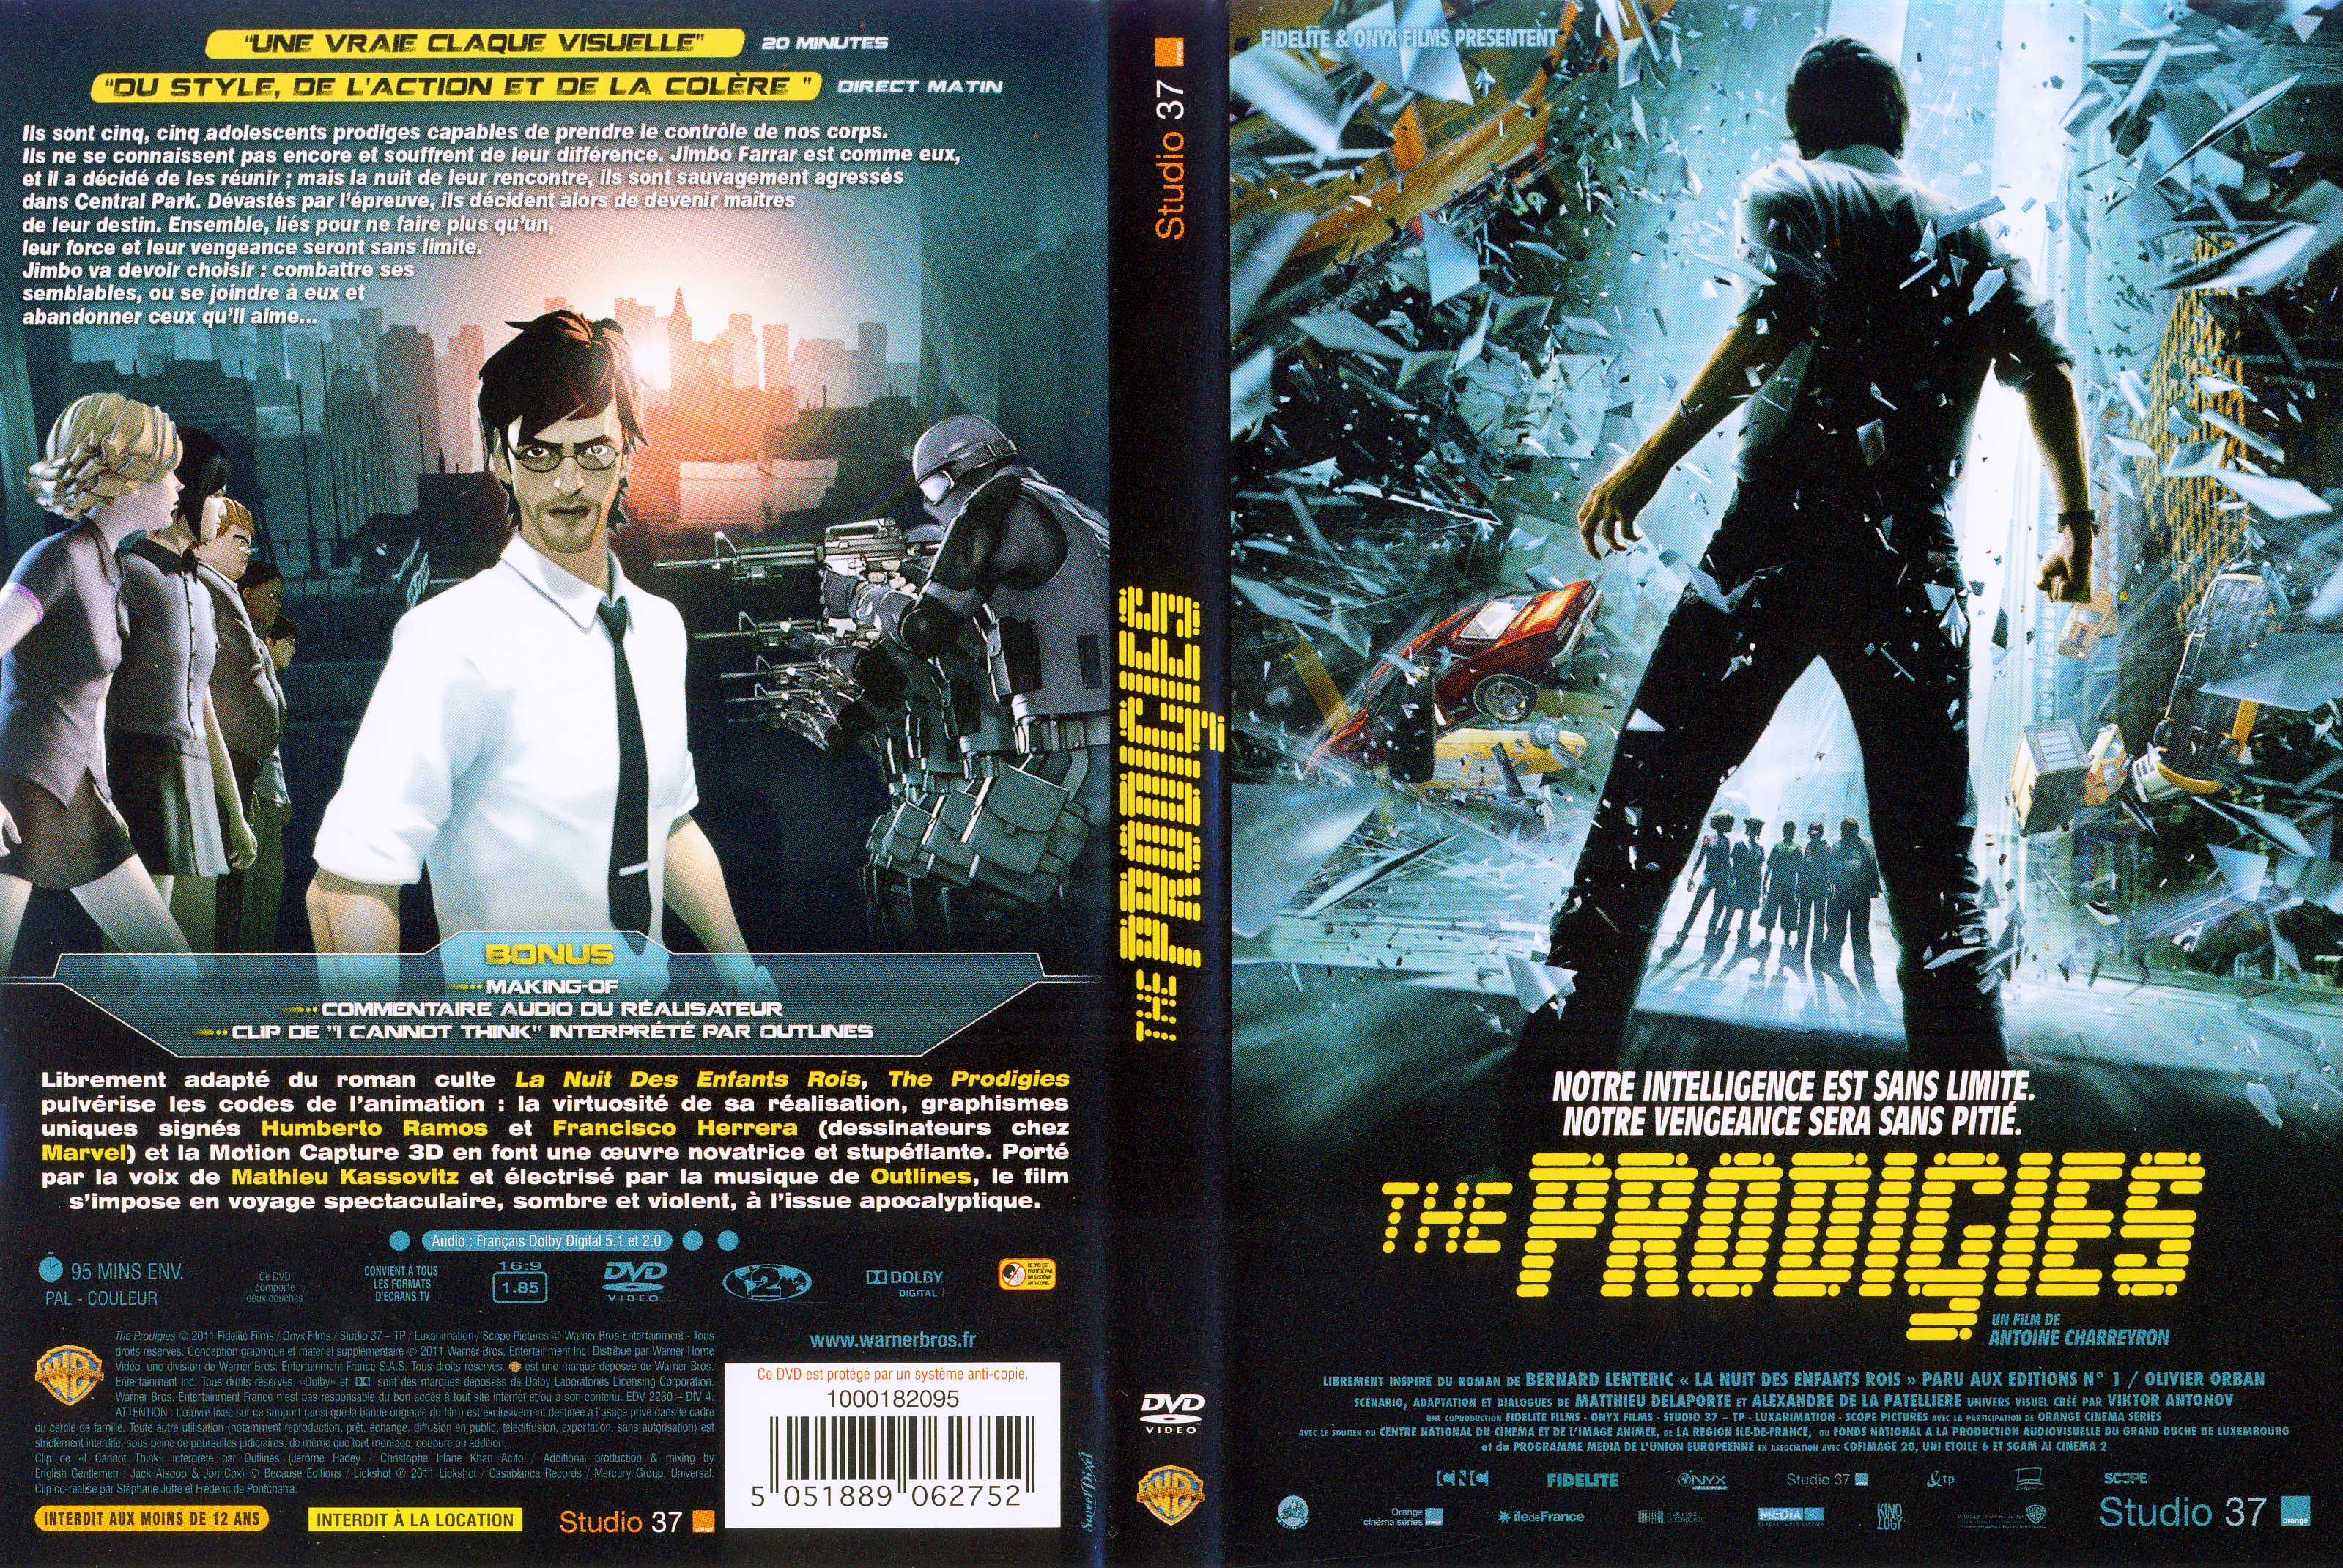 Jaquette DVD The Prodigies